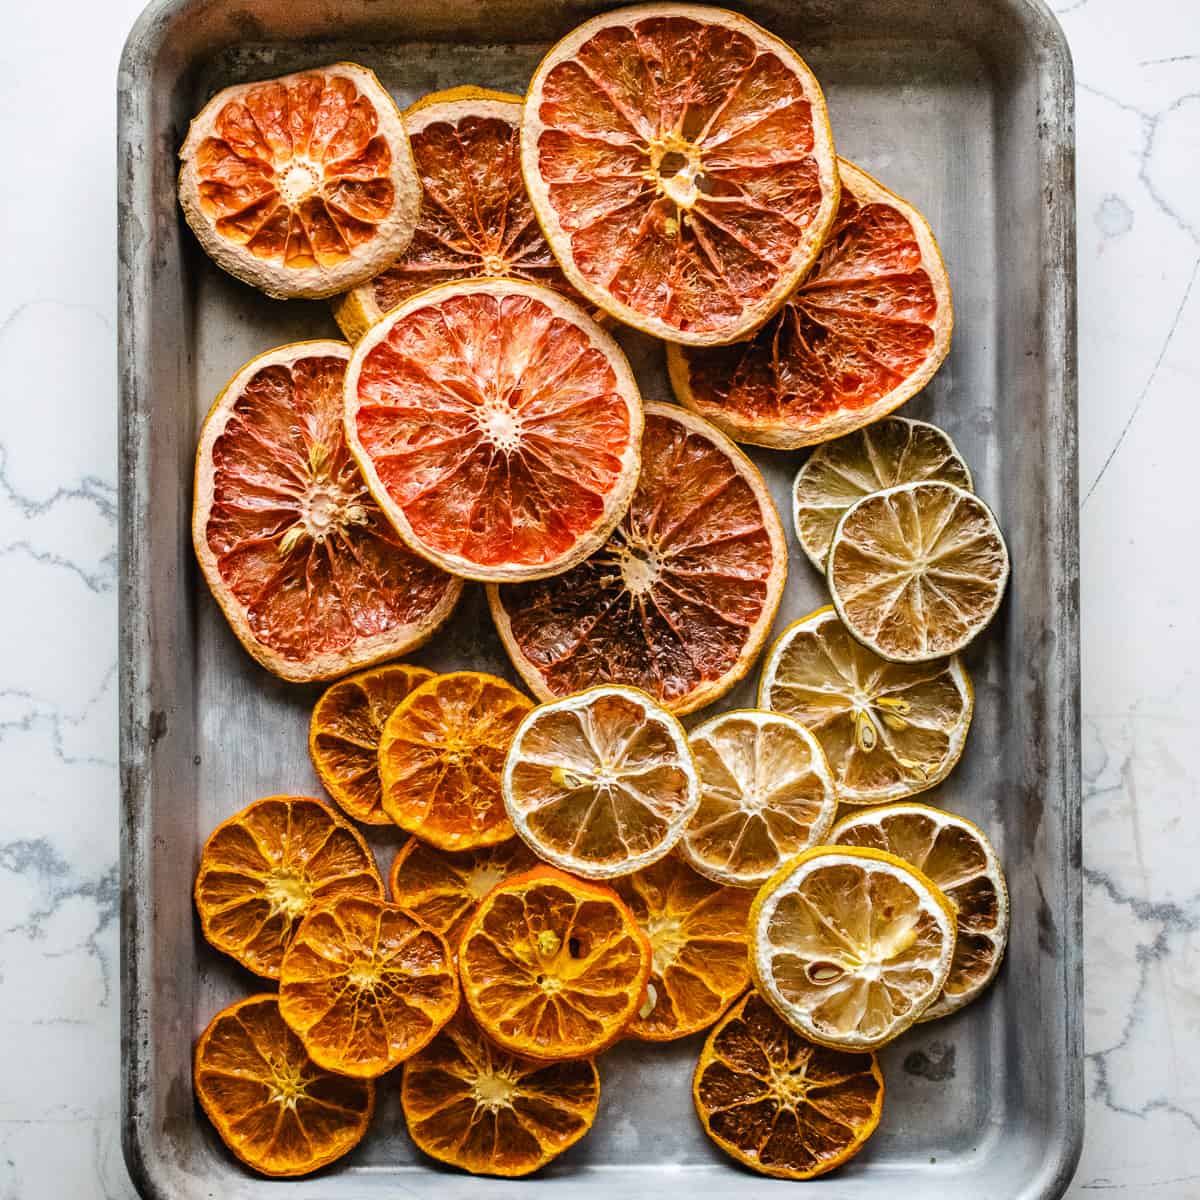 Dried oranges, grapefruit, lemon and lime slices.